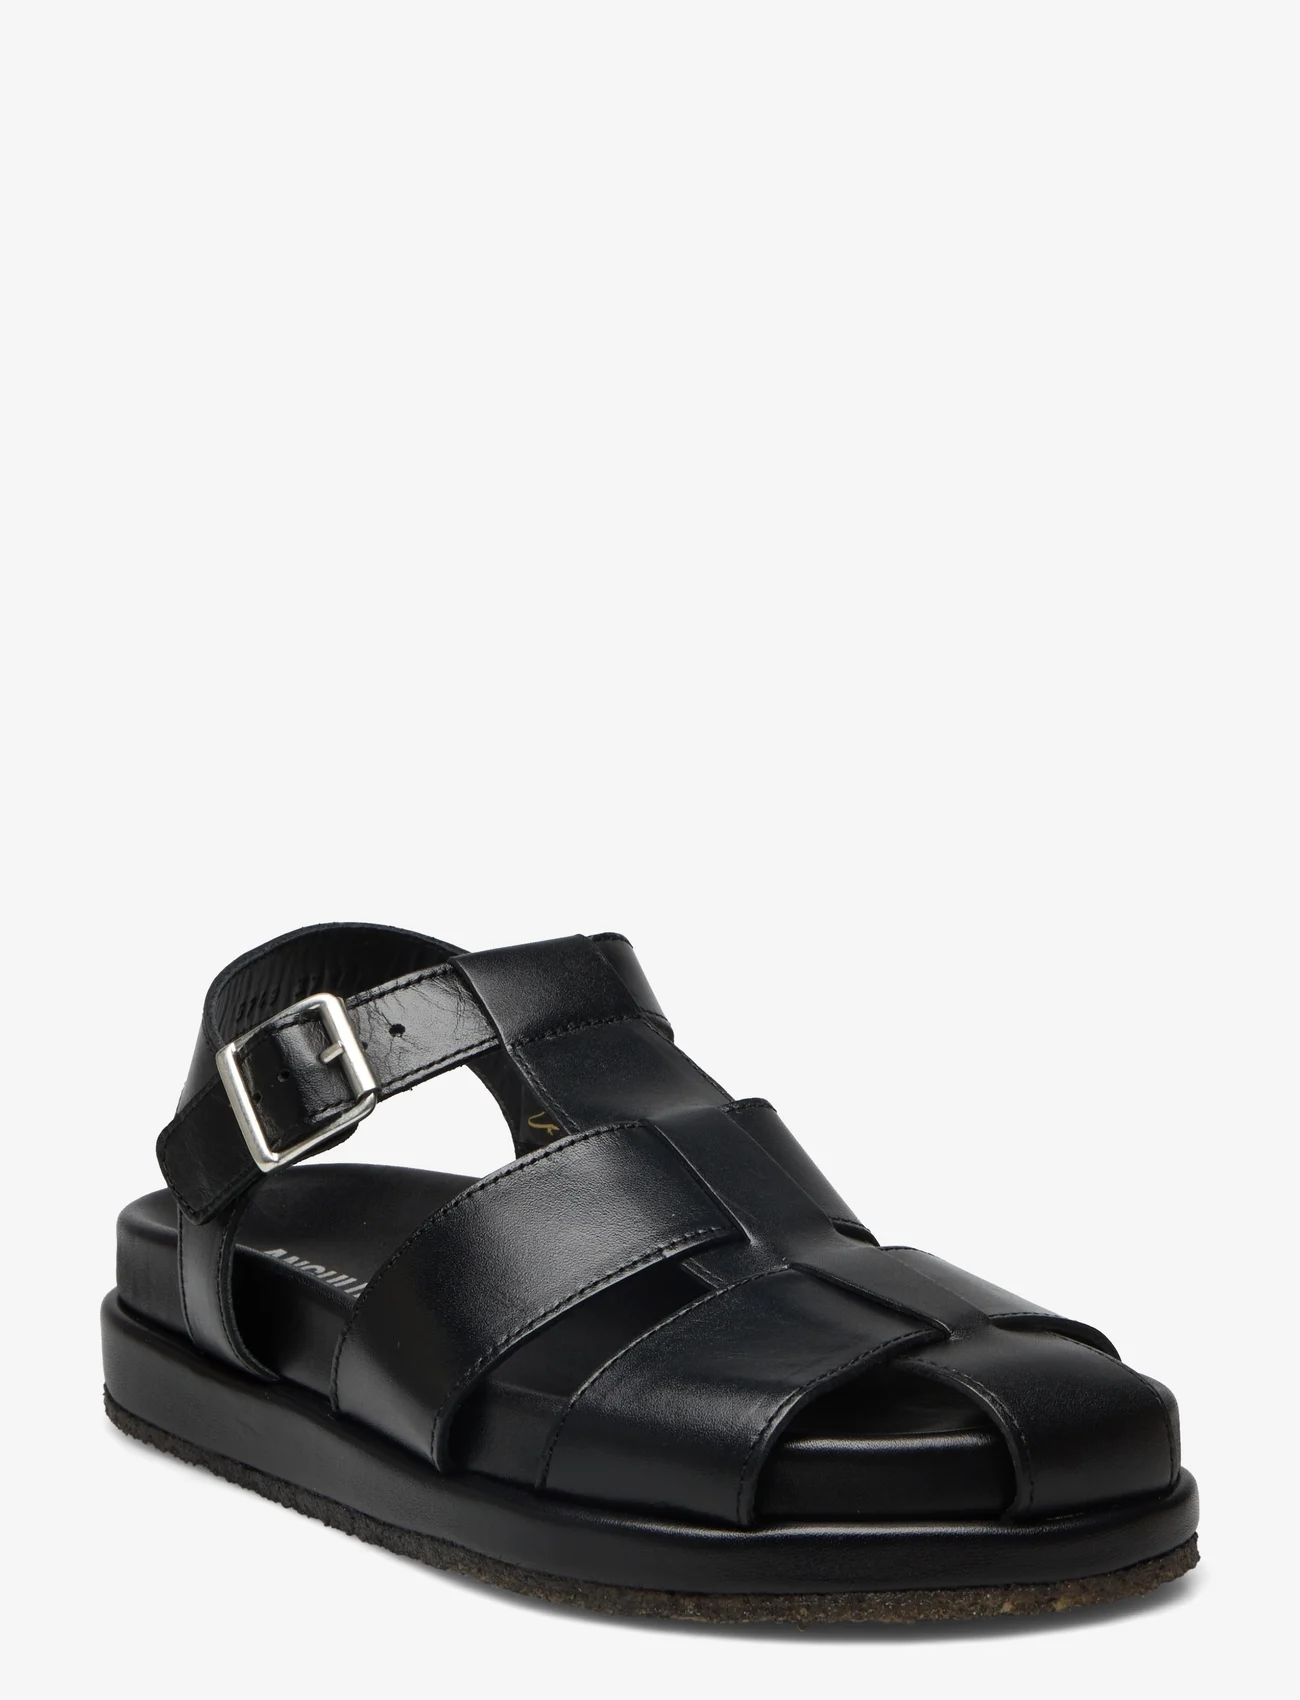 ANGULUS - Sandals - flat - open toe - op - platte sandalen - 1604/1785 black - 0